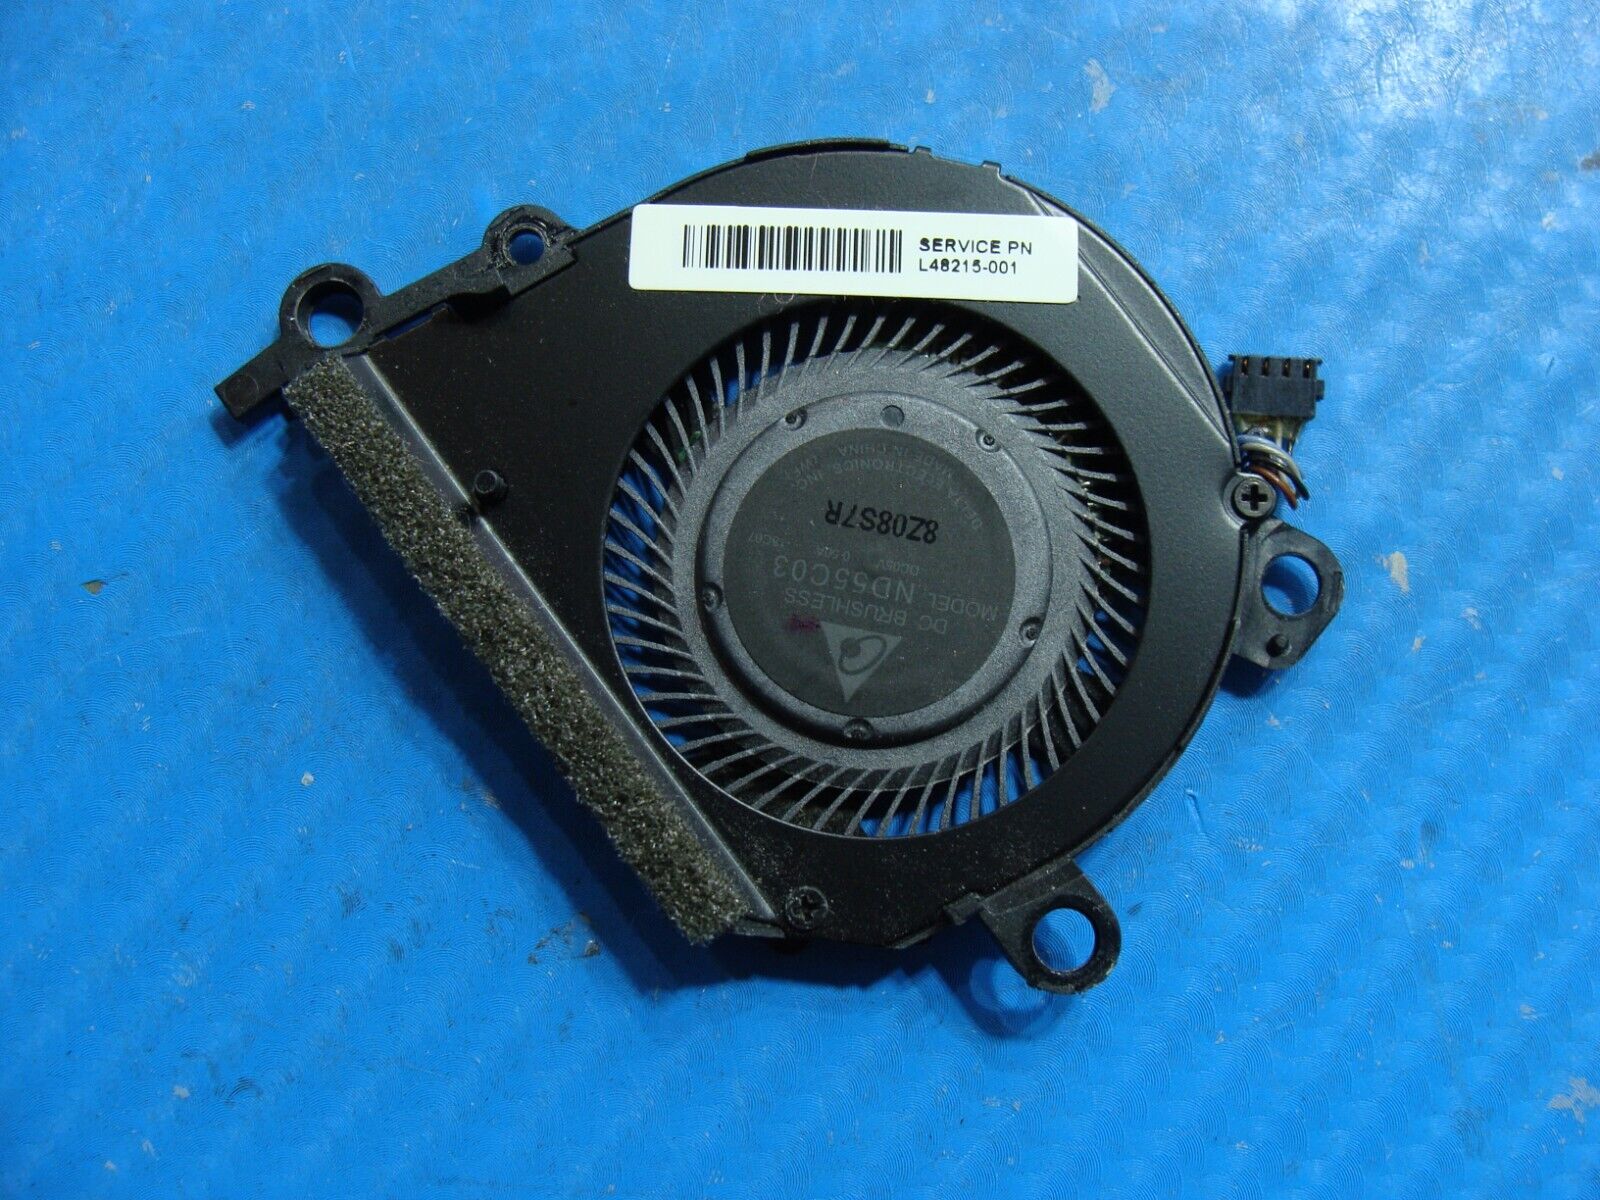 HP Spectre x360 13.3” 13-ap0023dx Genuine Laptop CPU Cooling Fan L48215-001